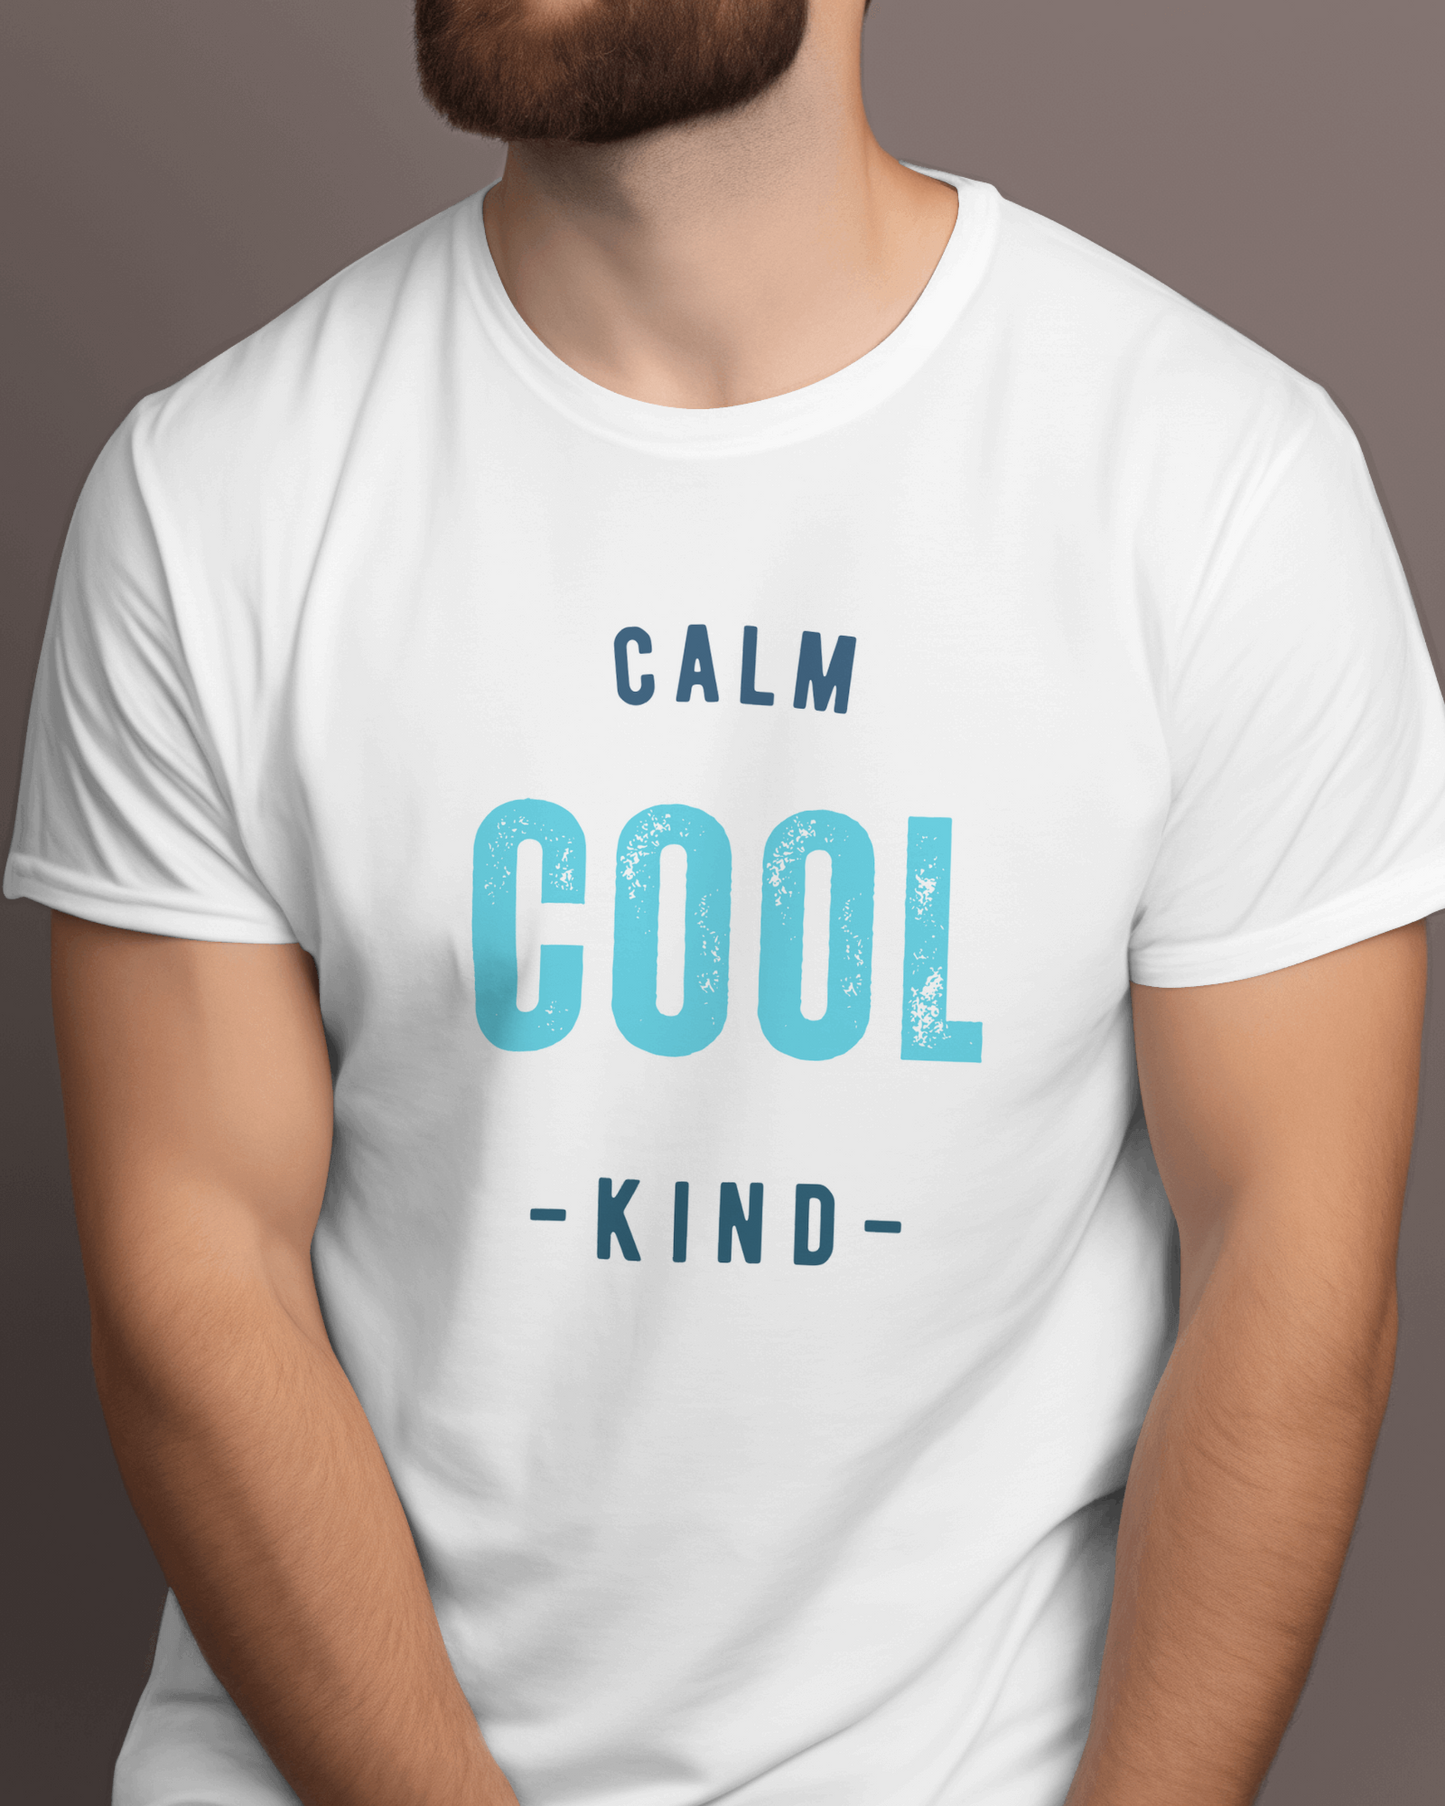 Cool t-shirts cotton